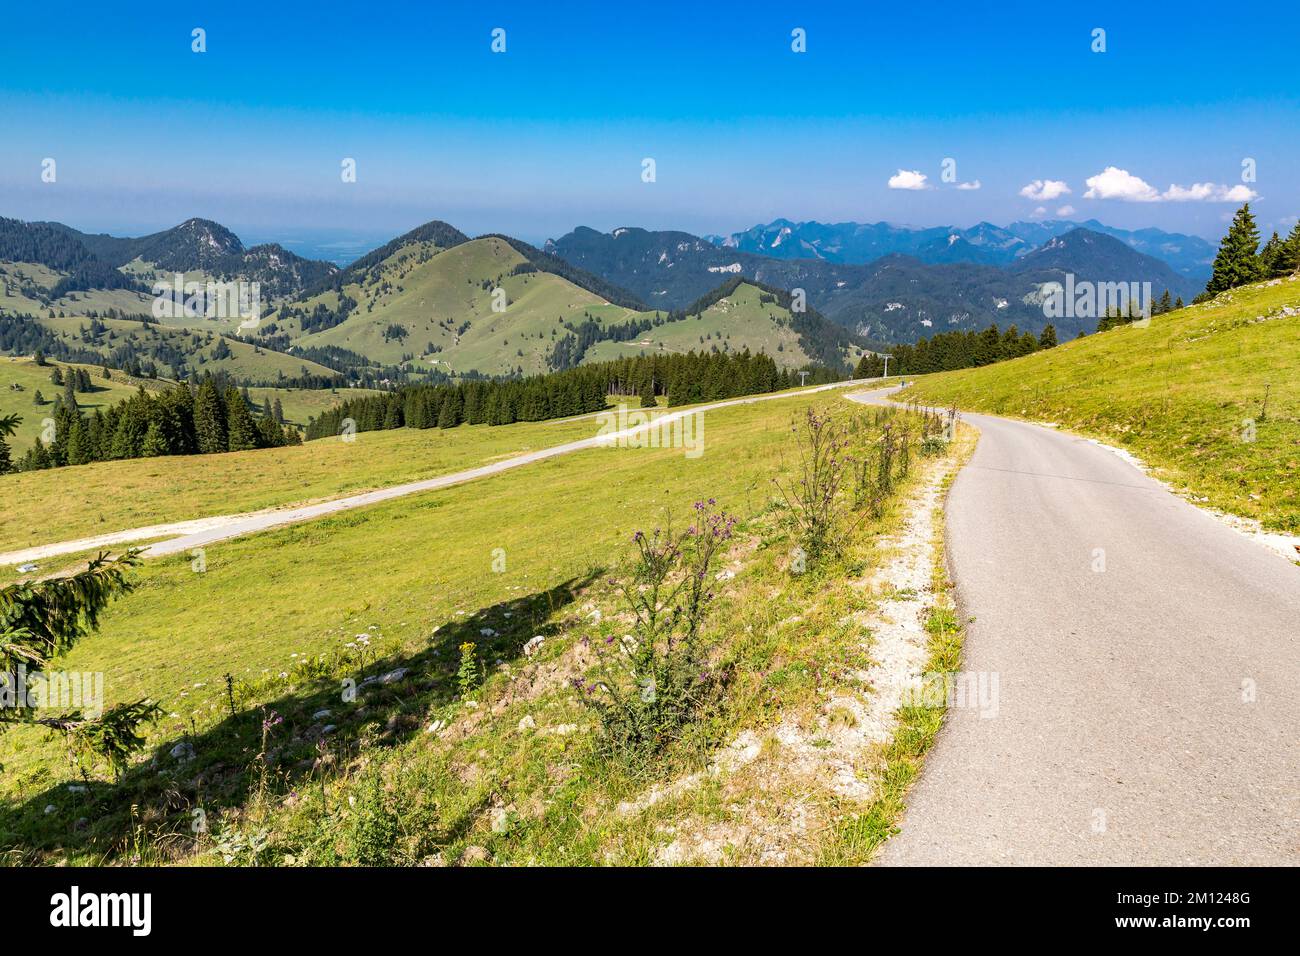 View of Mangfall Mountains and Chiemgau Alps, Wildbarren, 1442 m, Brünnstein, 1634 m, Rotwandlspitze, 1587 m, Oberes Sudelfeld, near Bayrischzell, Mangfall Mountains, Upper Bavaria, Bavaria, Germany, Europe Stock Photo